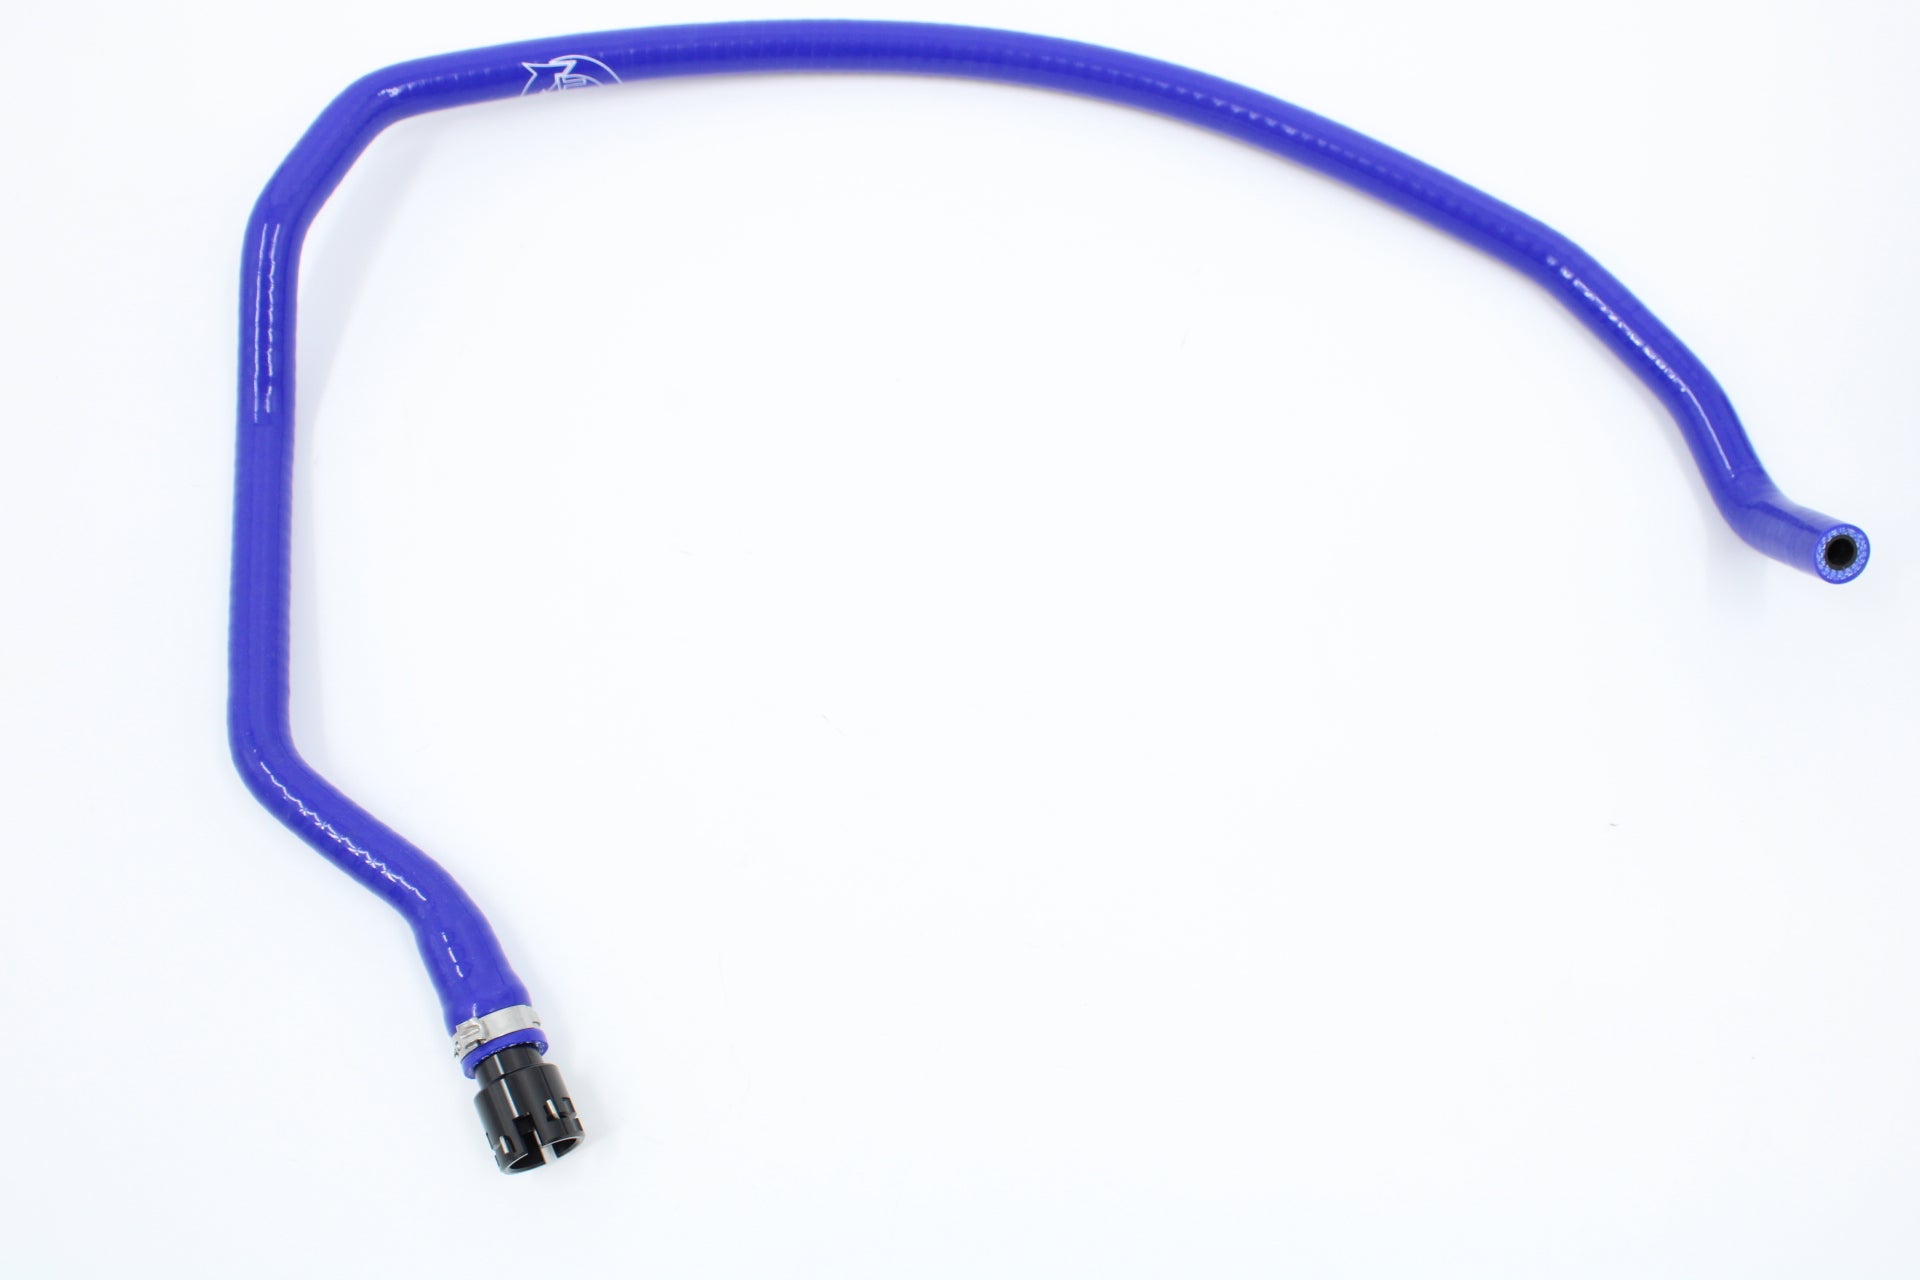 E46 Non-M Silicone Coolant Hose Kit With New Connectors